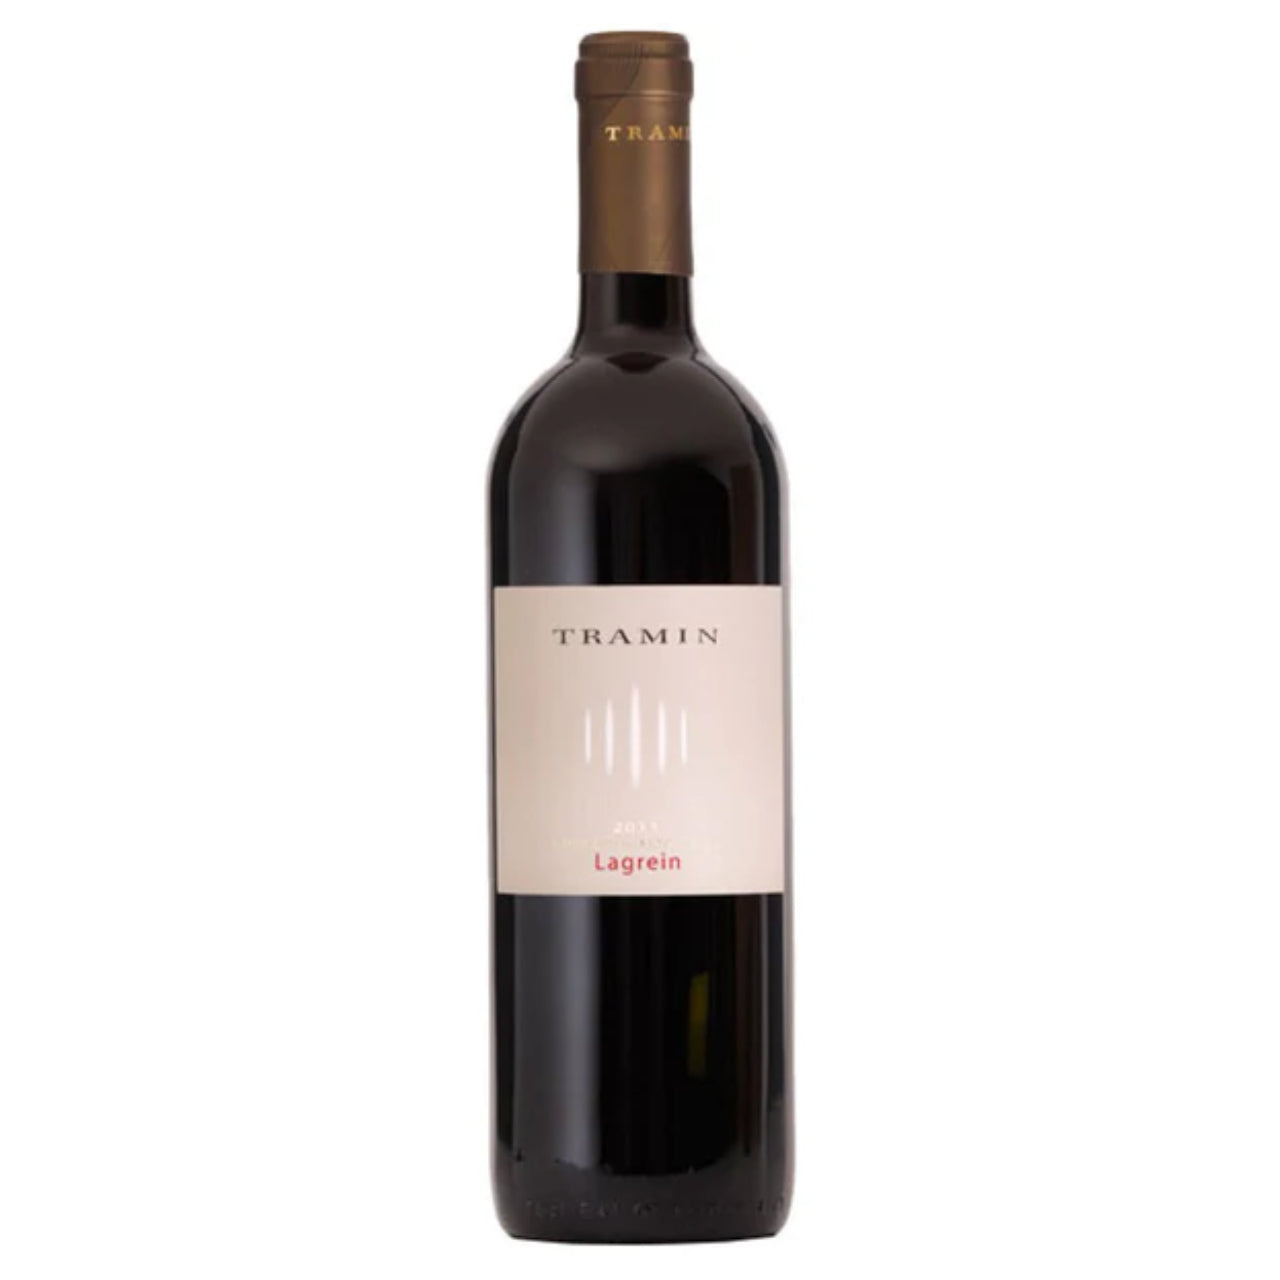 Tramin Lagrein 2017 - Wine Italy Red - Liquor Wine Cave